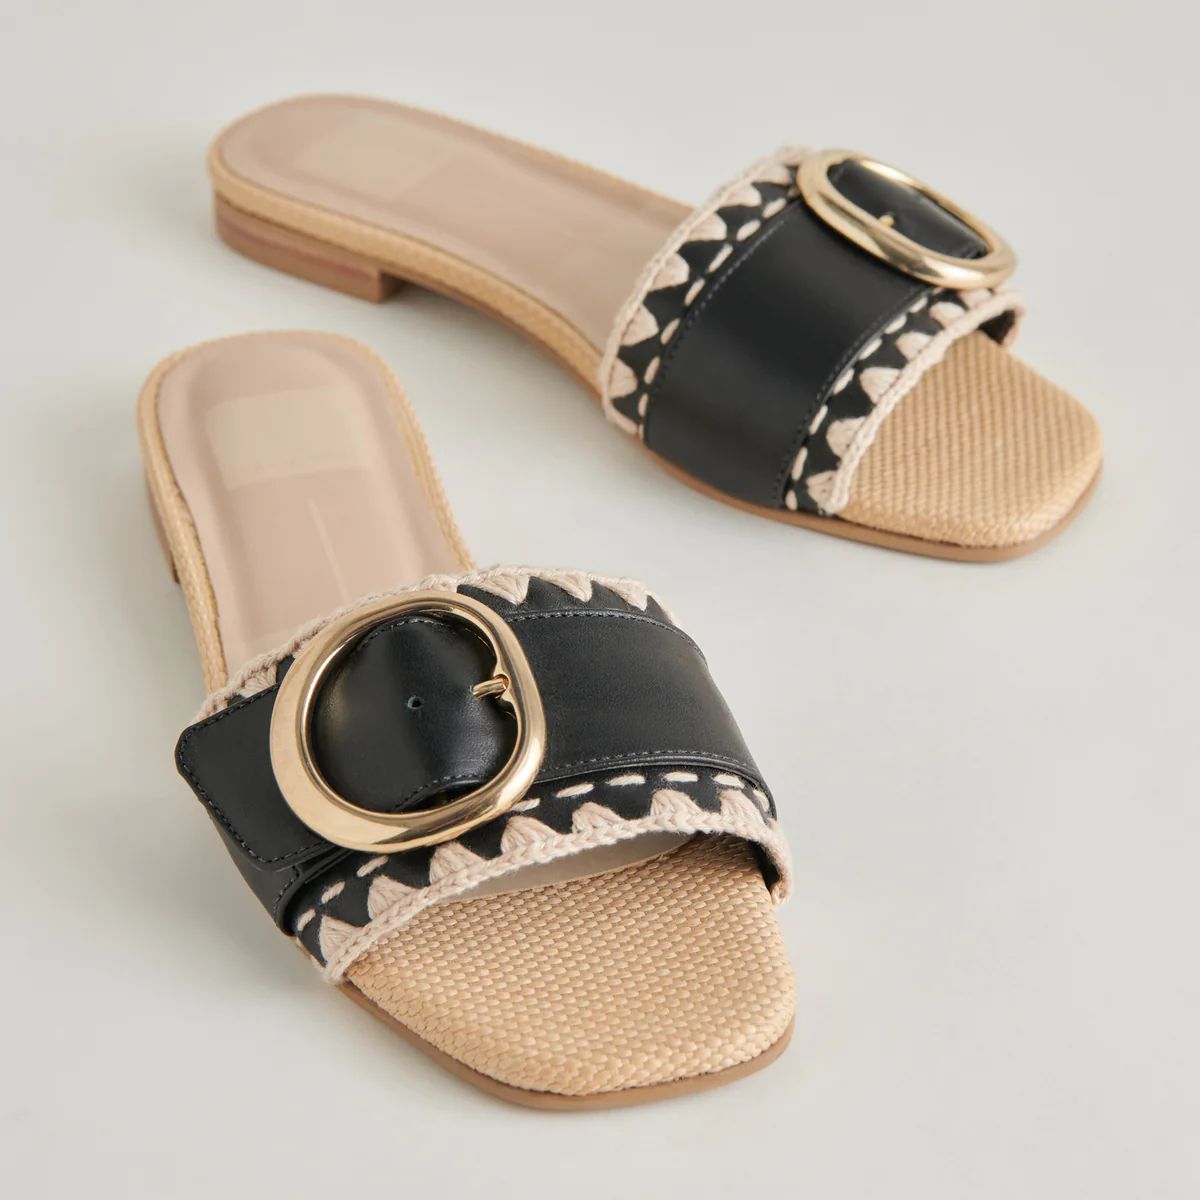 Grecia Sandals | DolceVita.com